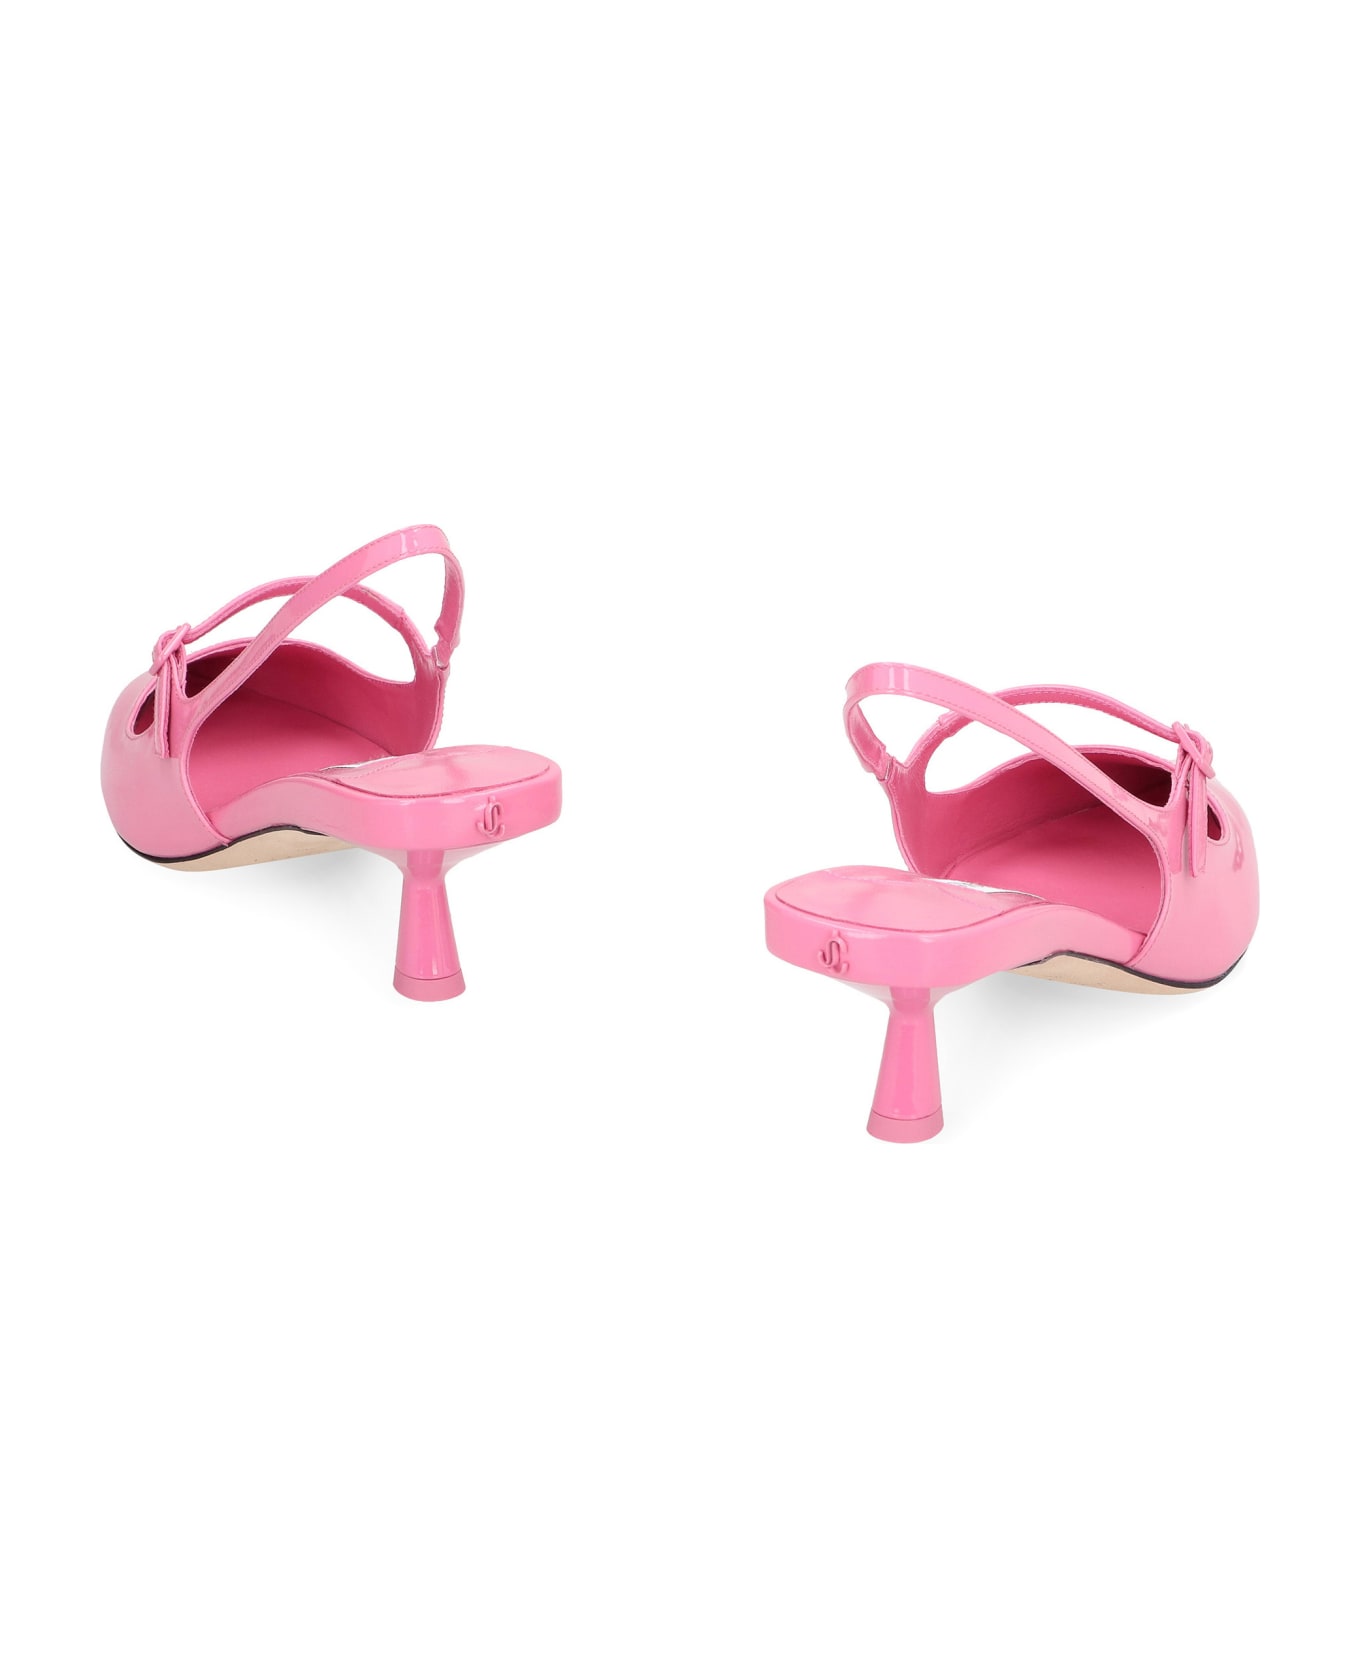 Jimmy Choo Didi Patent Leather Slingback Pumps - Pink ハイヒール